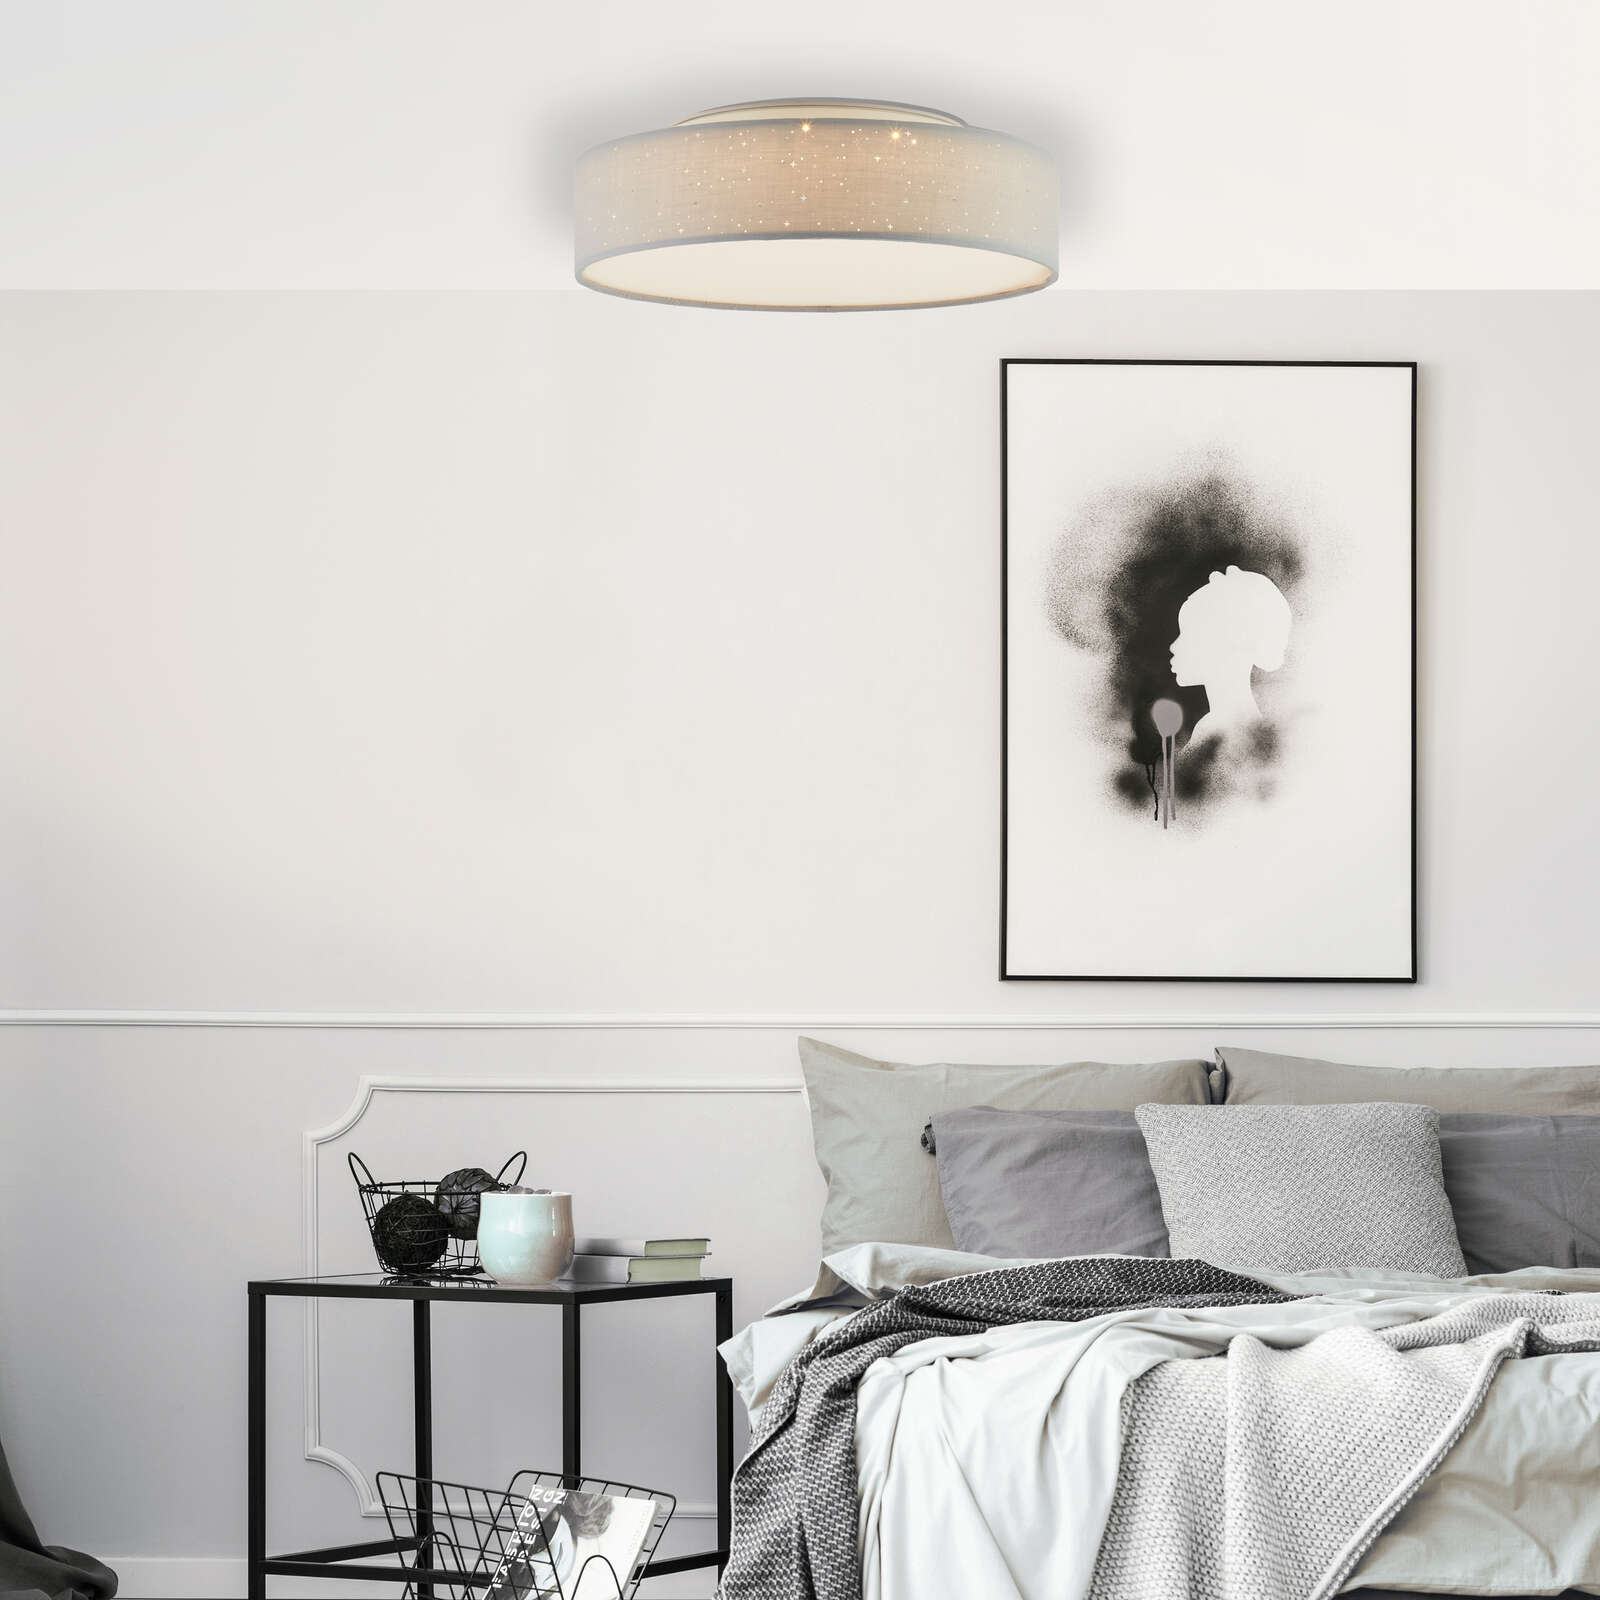             Textile ceiling light - Ava 1 - Grey
        